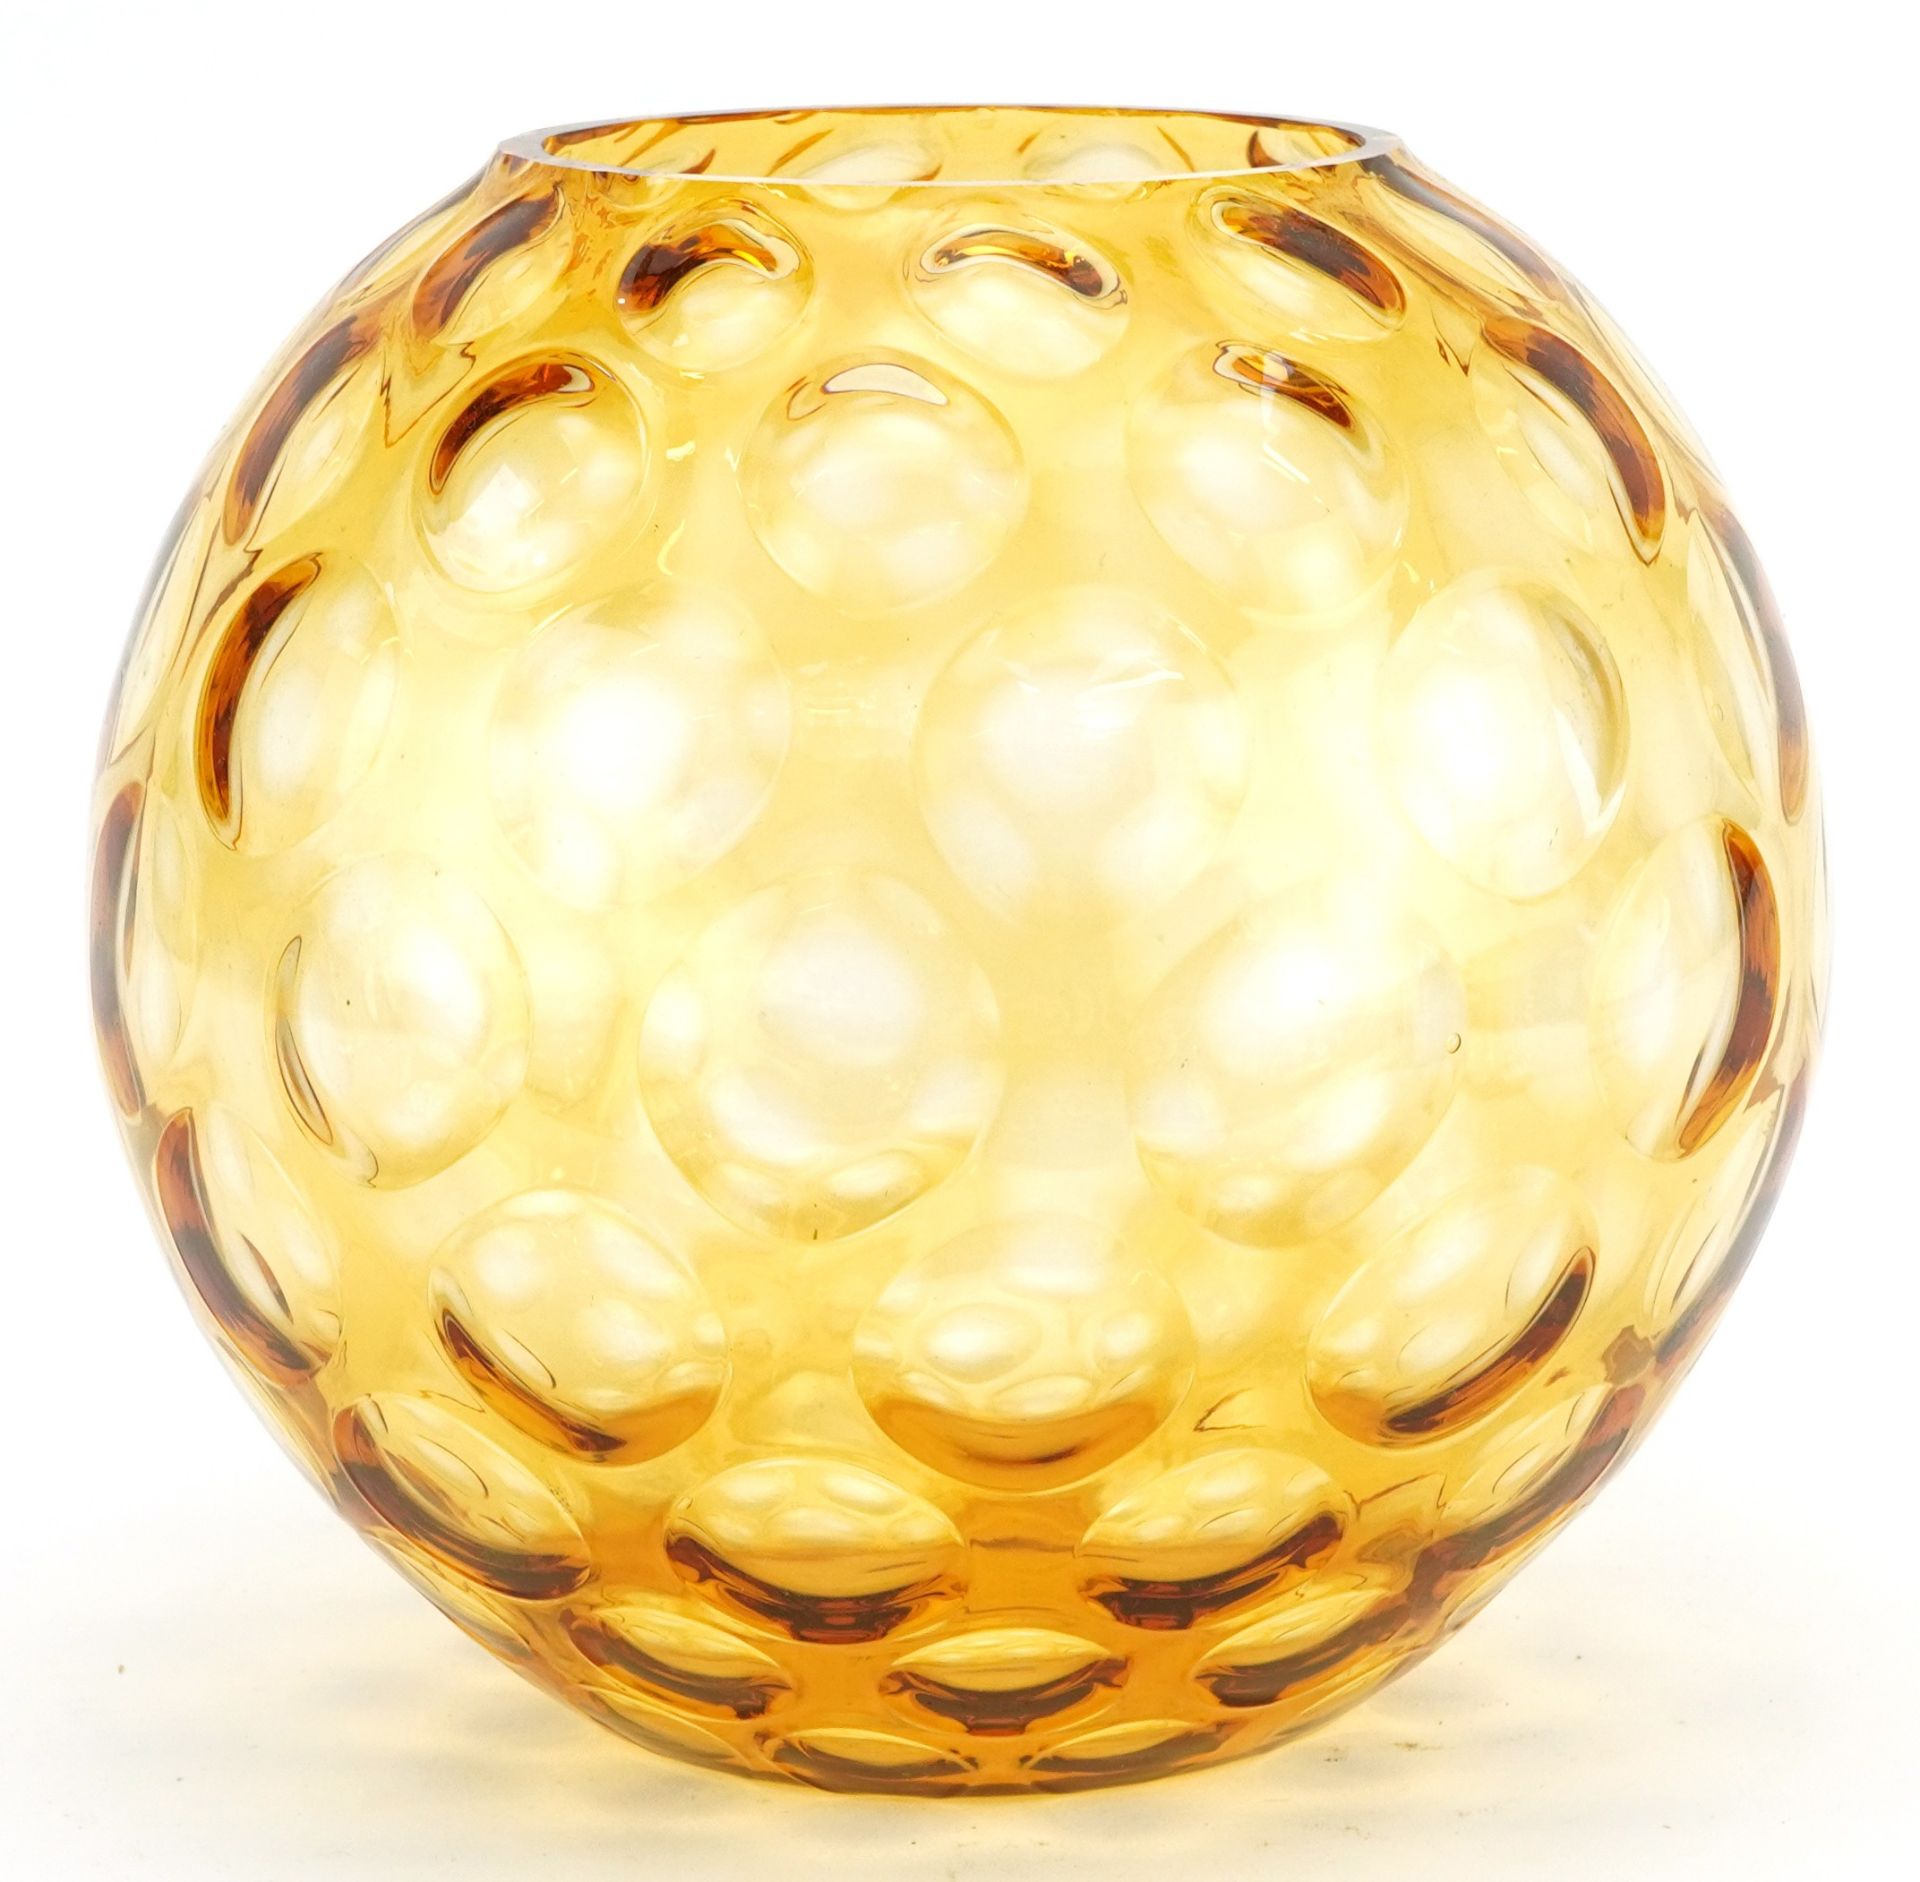 Amber optical glass vase, possibly Sklo Borske, 20cm high : For further information on this lot